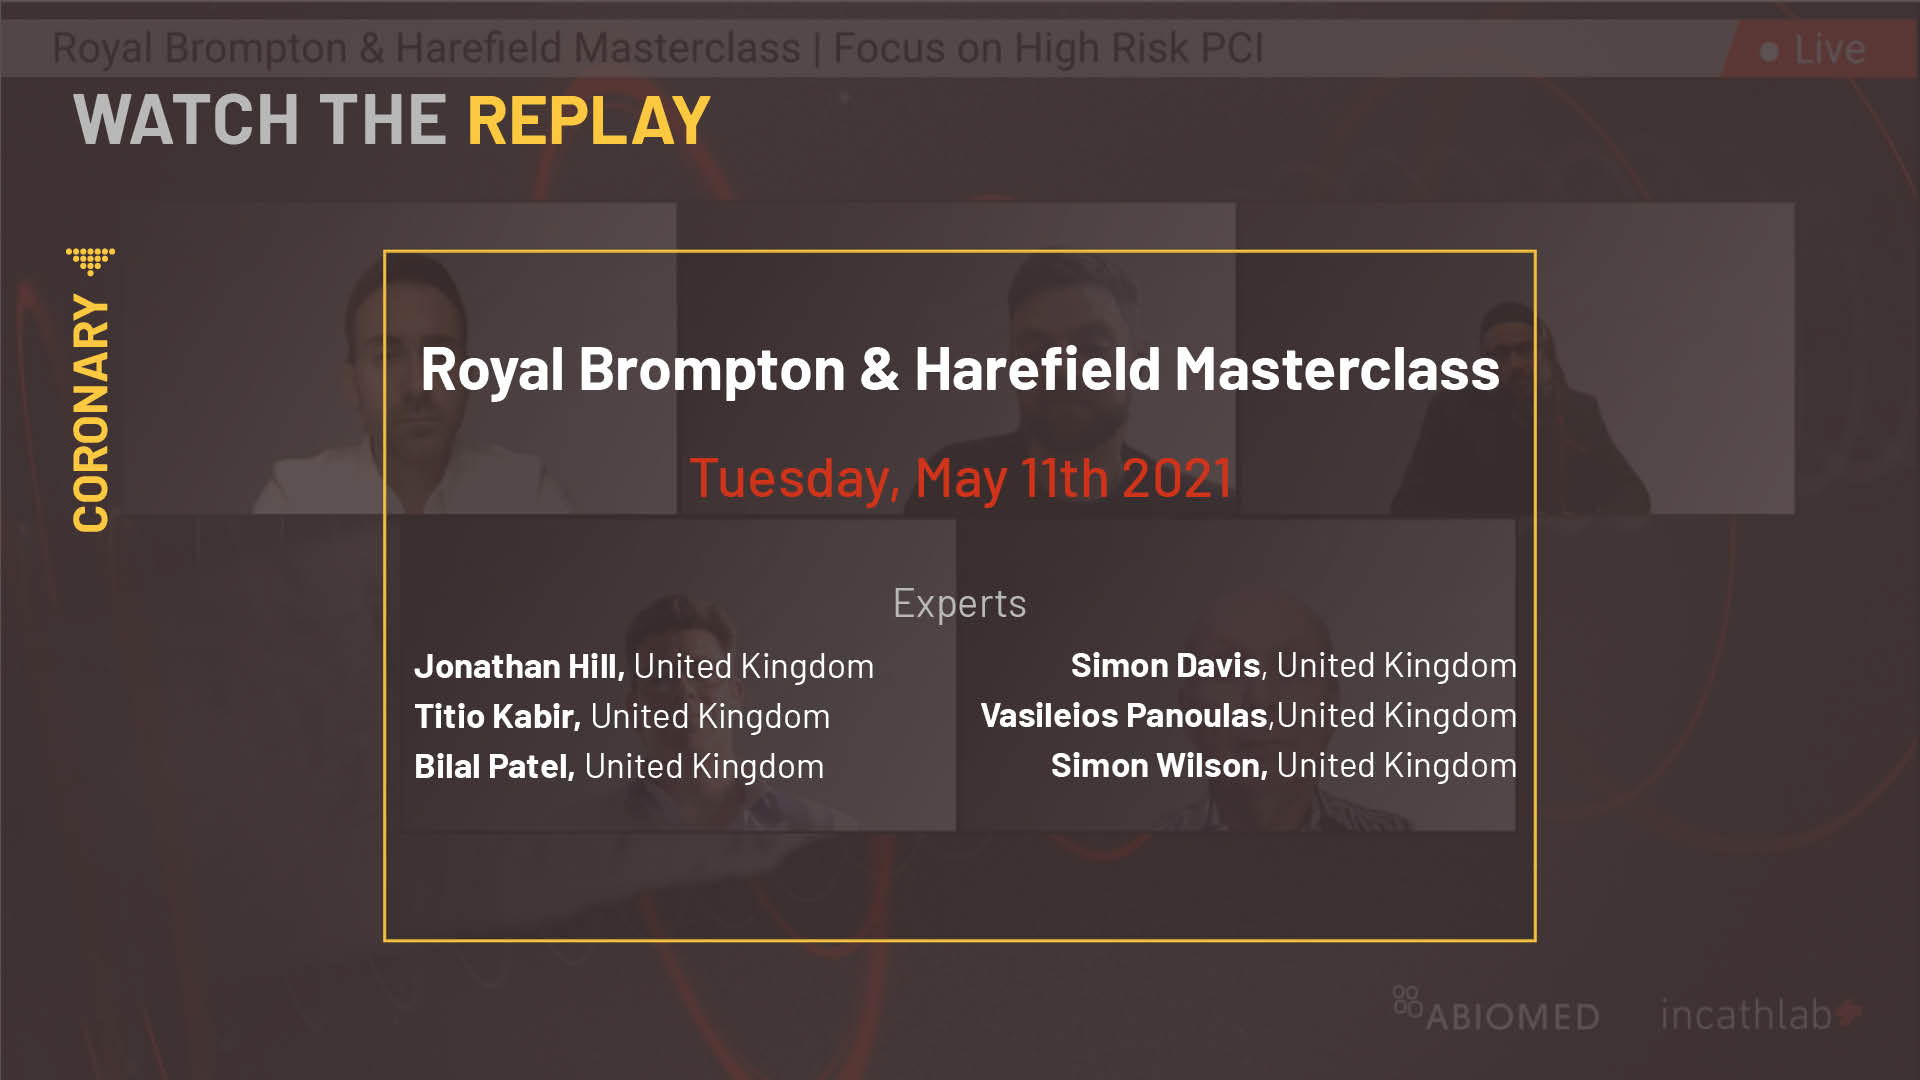 Royal Brompton & Harefield Masterclass